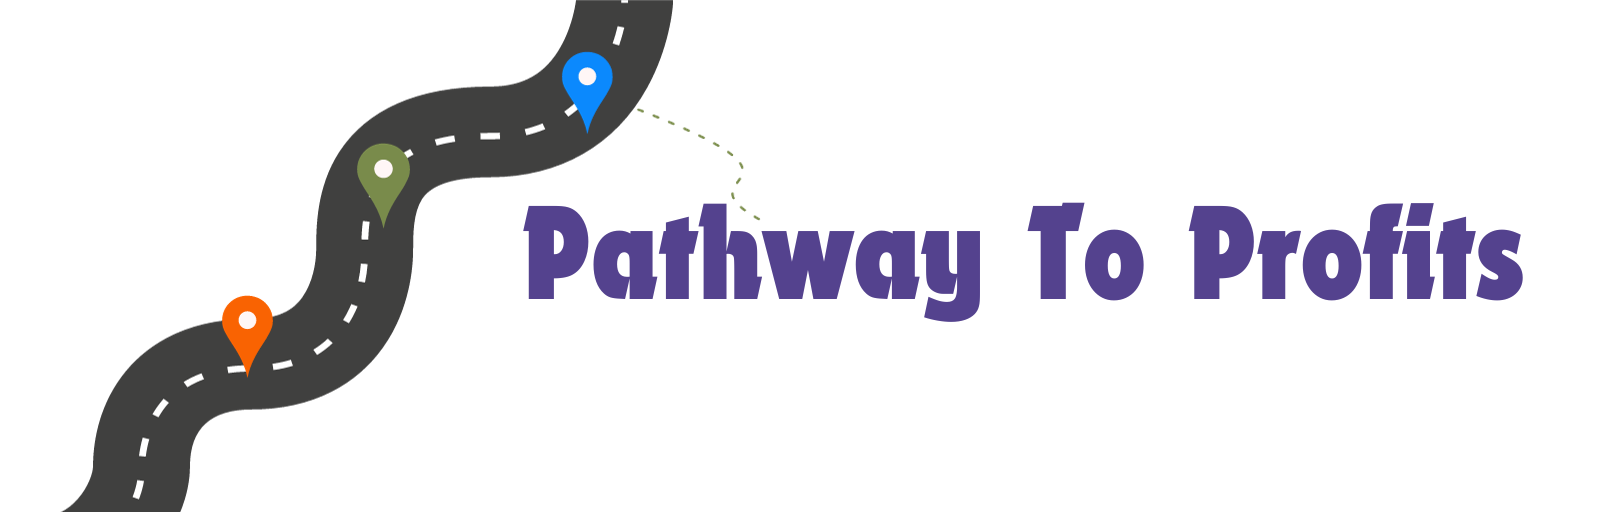 Pathway To Profits Roadmap Banner-2